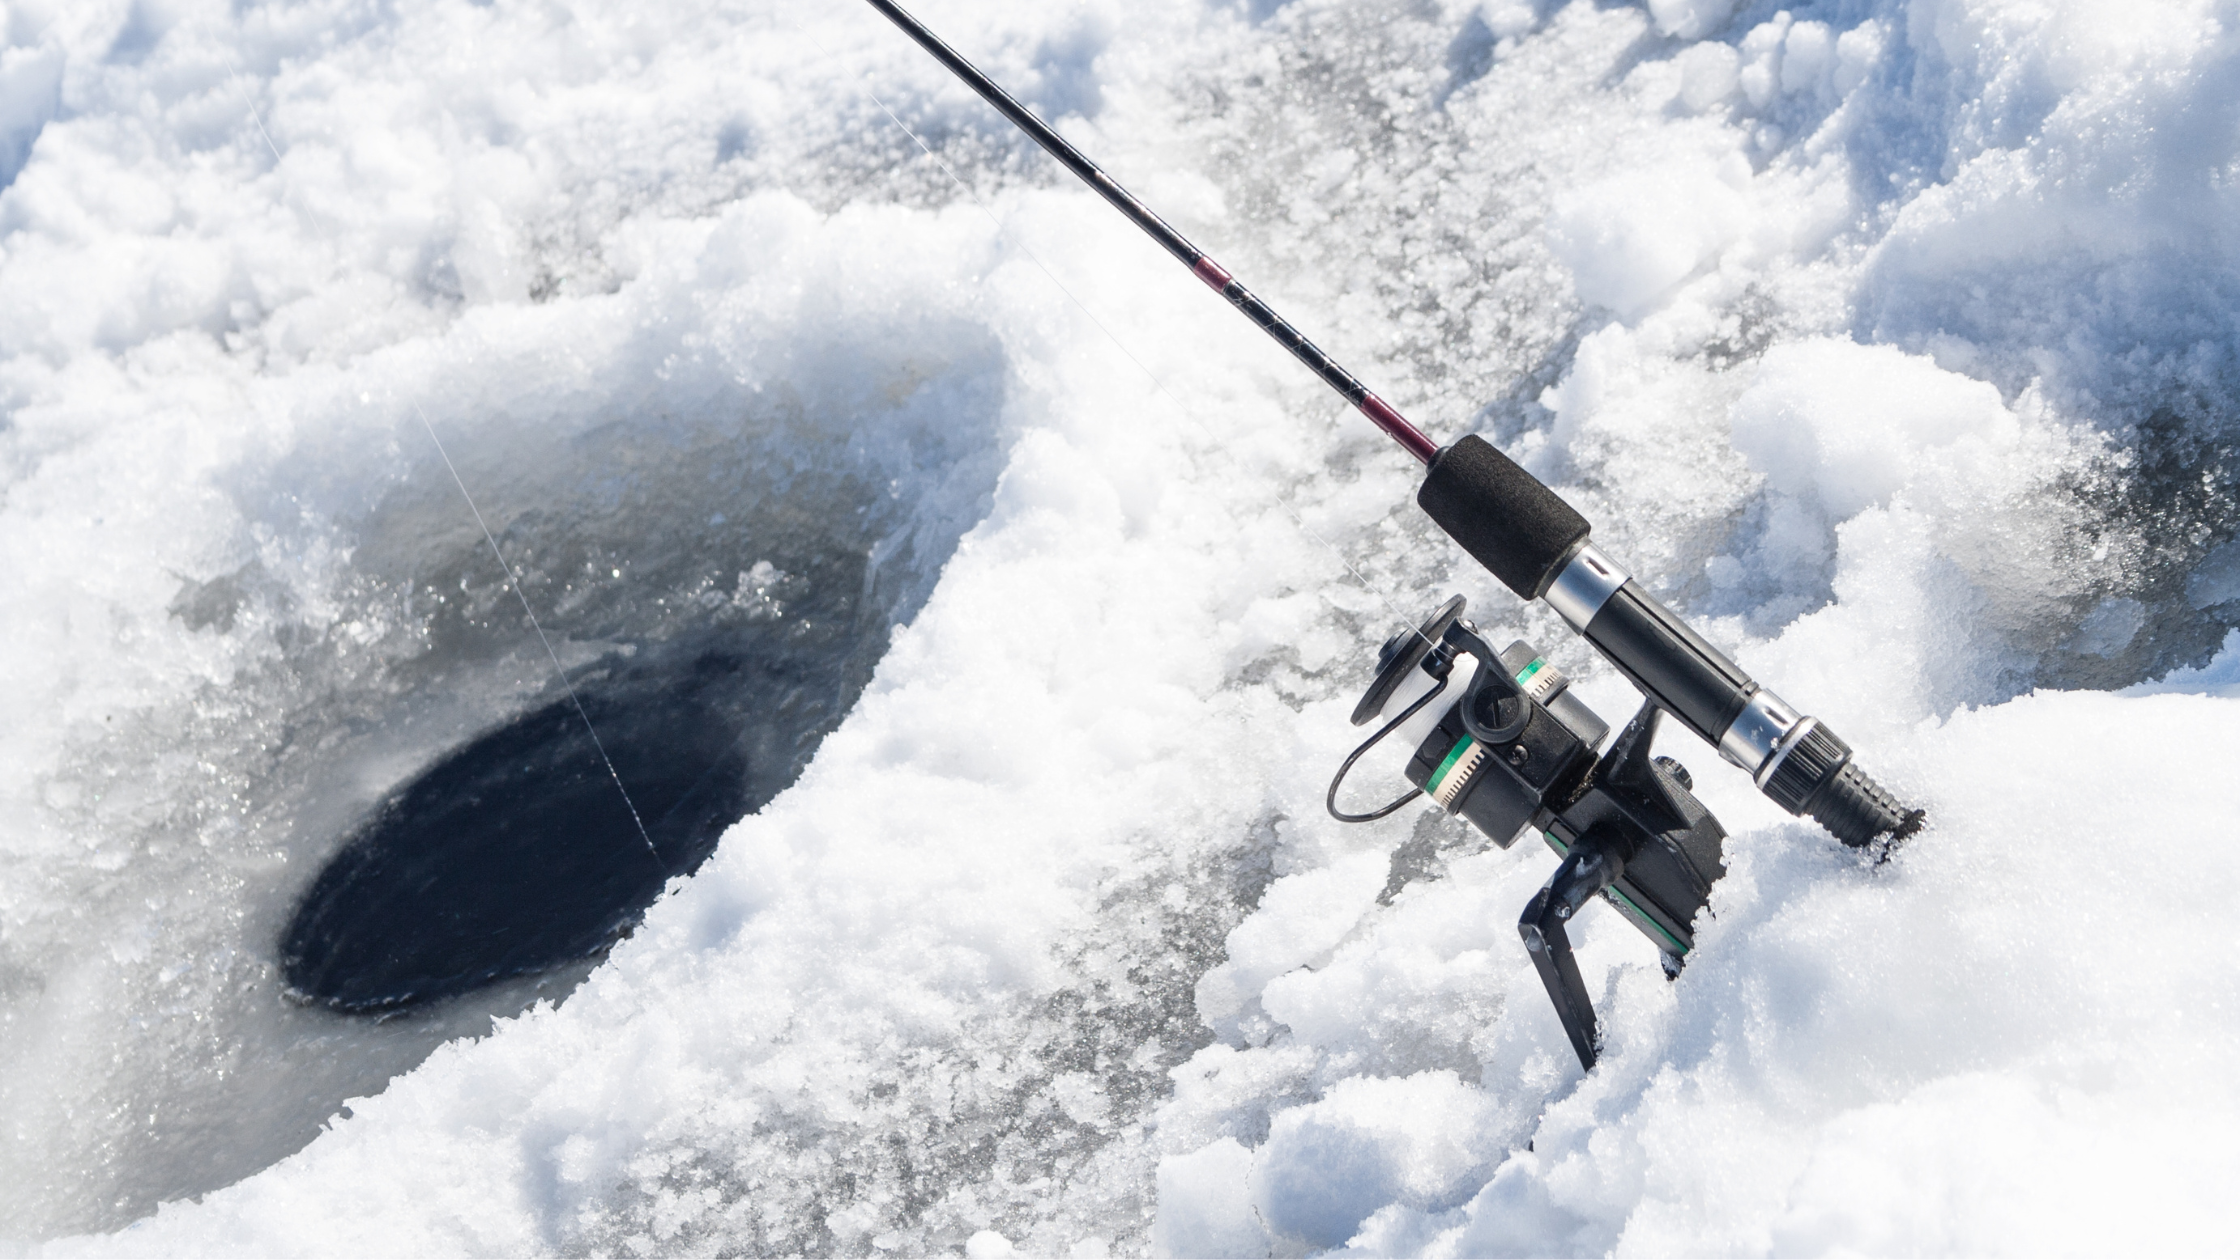 Ice Fishing on Leech Lake: Preparing for the Winter Fishing Season